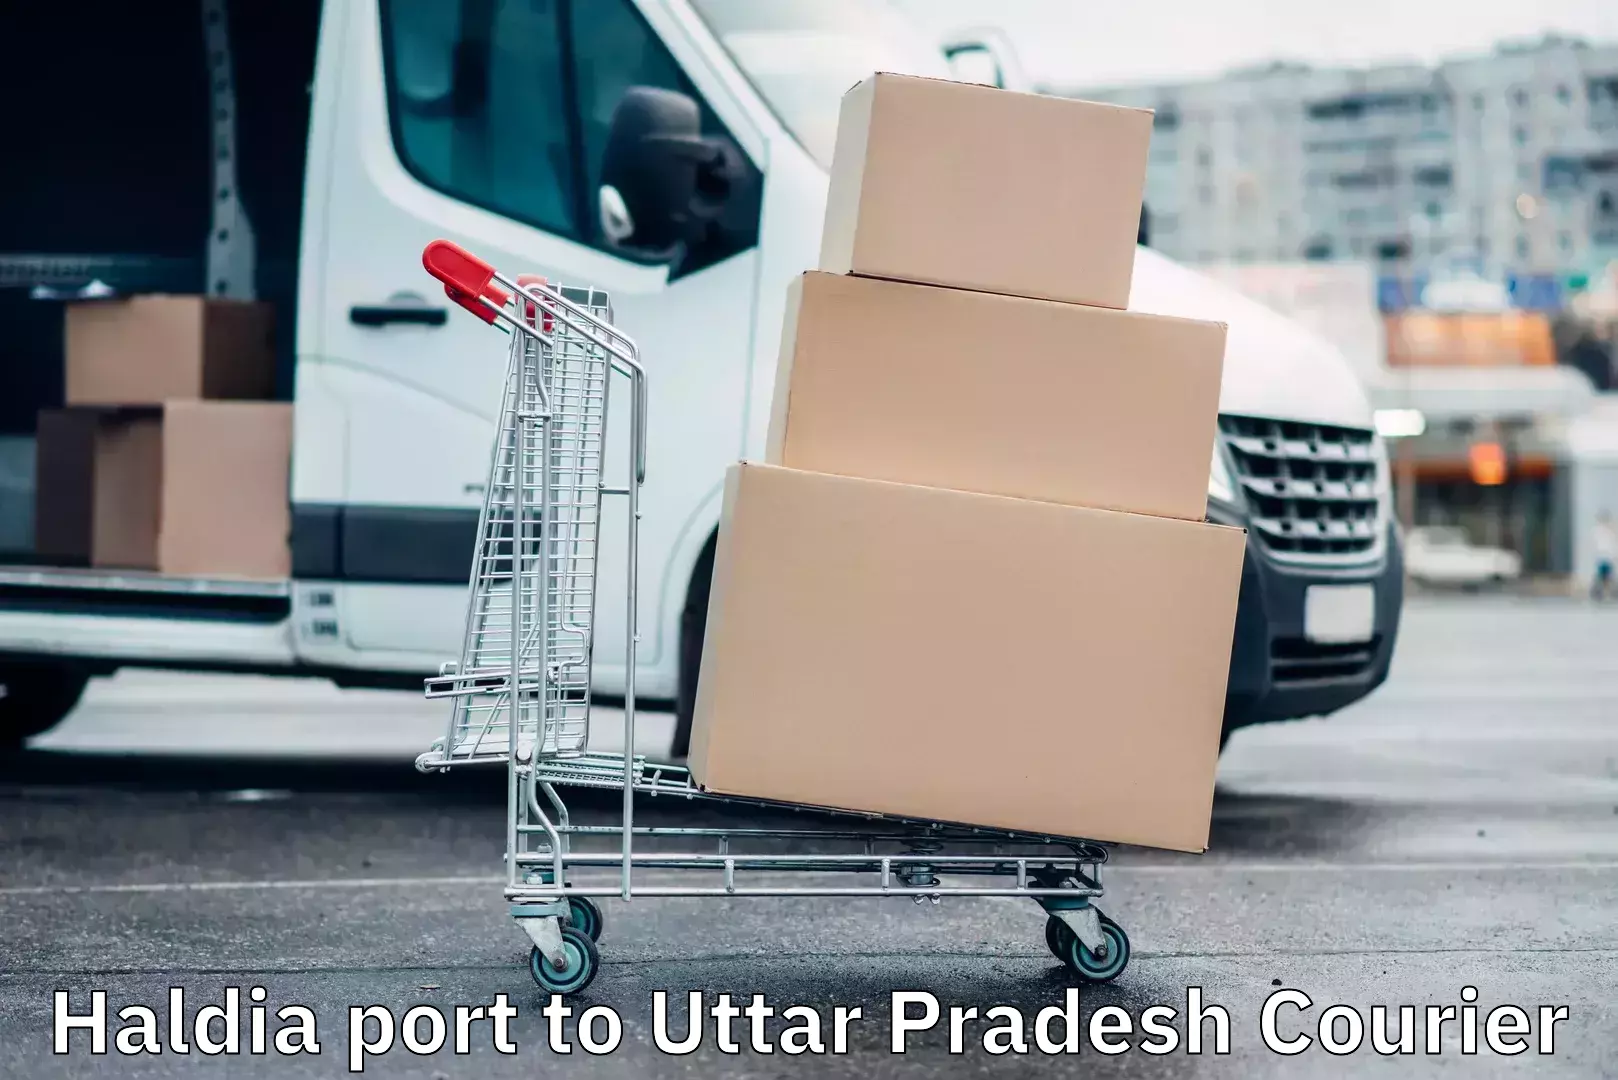 Nationwide courier service Haldia port to Uttar Pradesh